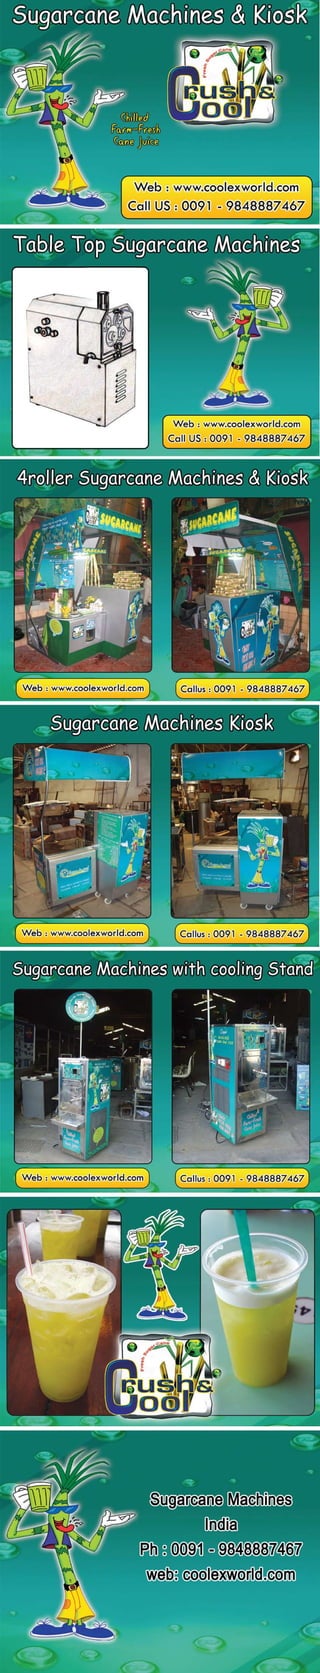 Sugarcane machine andhrapradesh